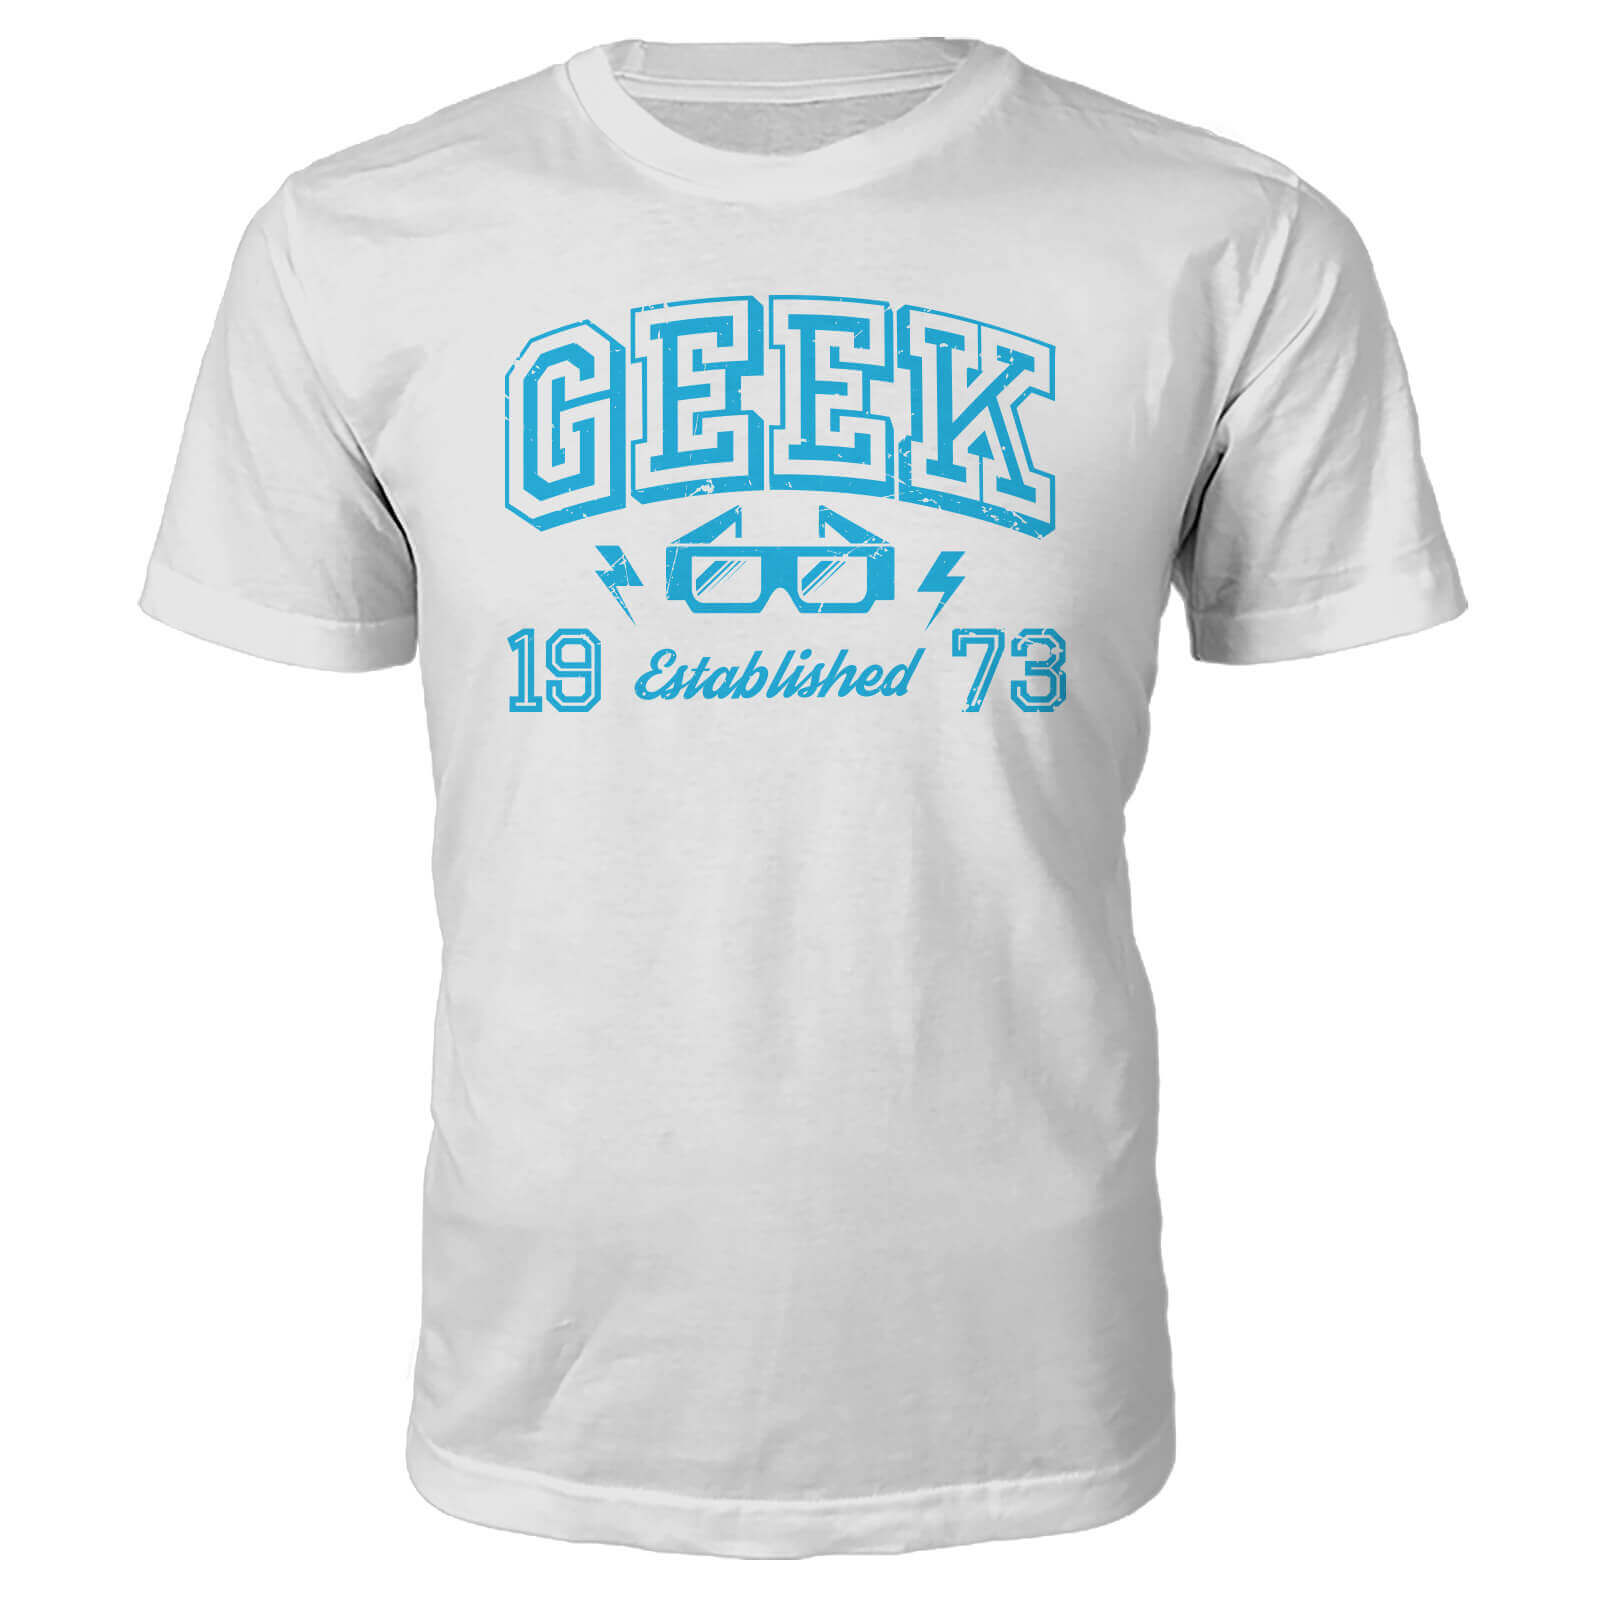 Geek Established 1970's T-Shirt- White - XXL - 1973